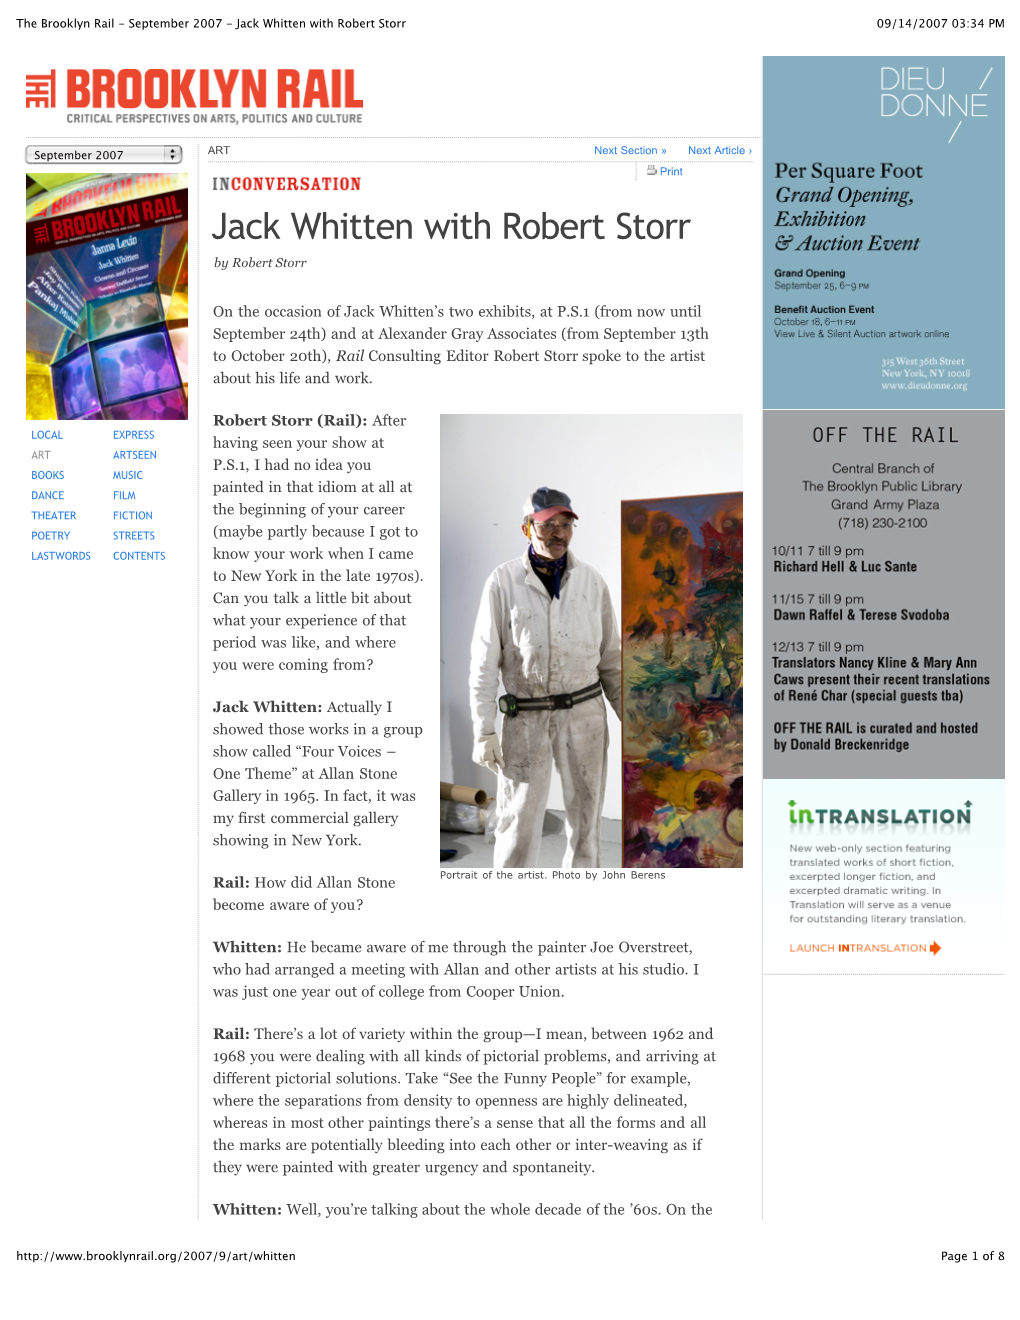 Jack Whitten with Robert Storr 09/14/2007 03:34 PM